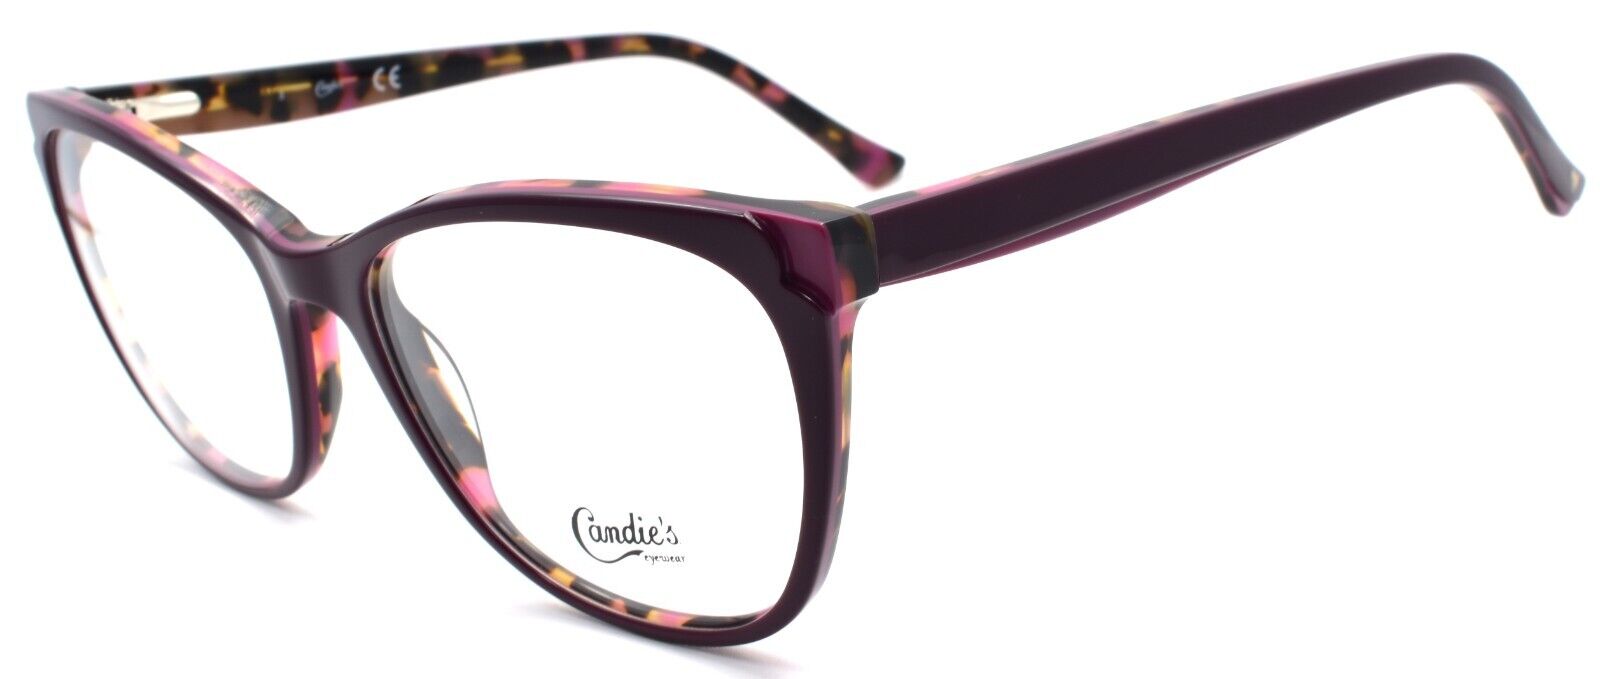 1-Candies CA0188 081 Women's Eyeglasses Frames 53-17-140 Shiny Violet-889214172709-IKSpecs